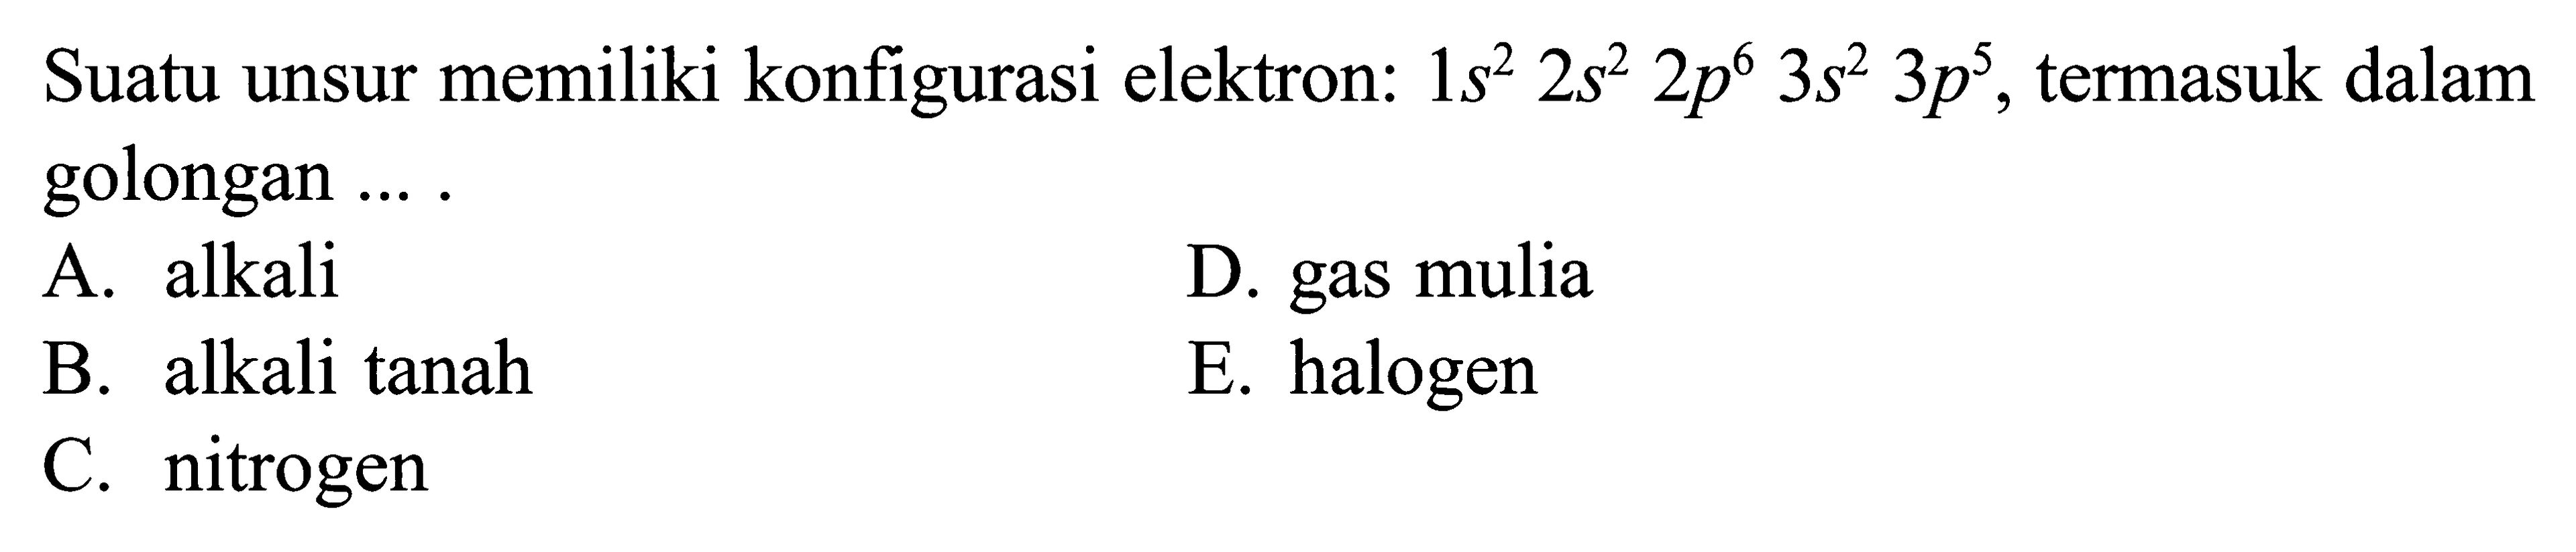 Suatu unsur memiliki konfigurasi elektron: 1s^2 2s^2 2p^6 3s^2 3p^5, termasuk dalam golongan....